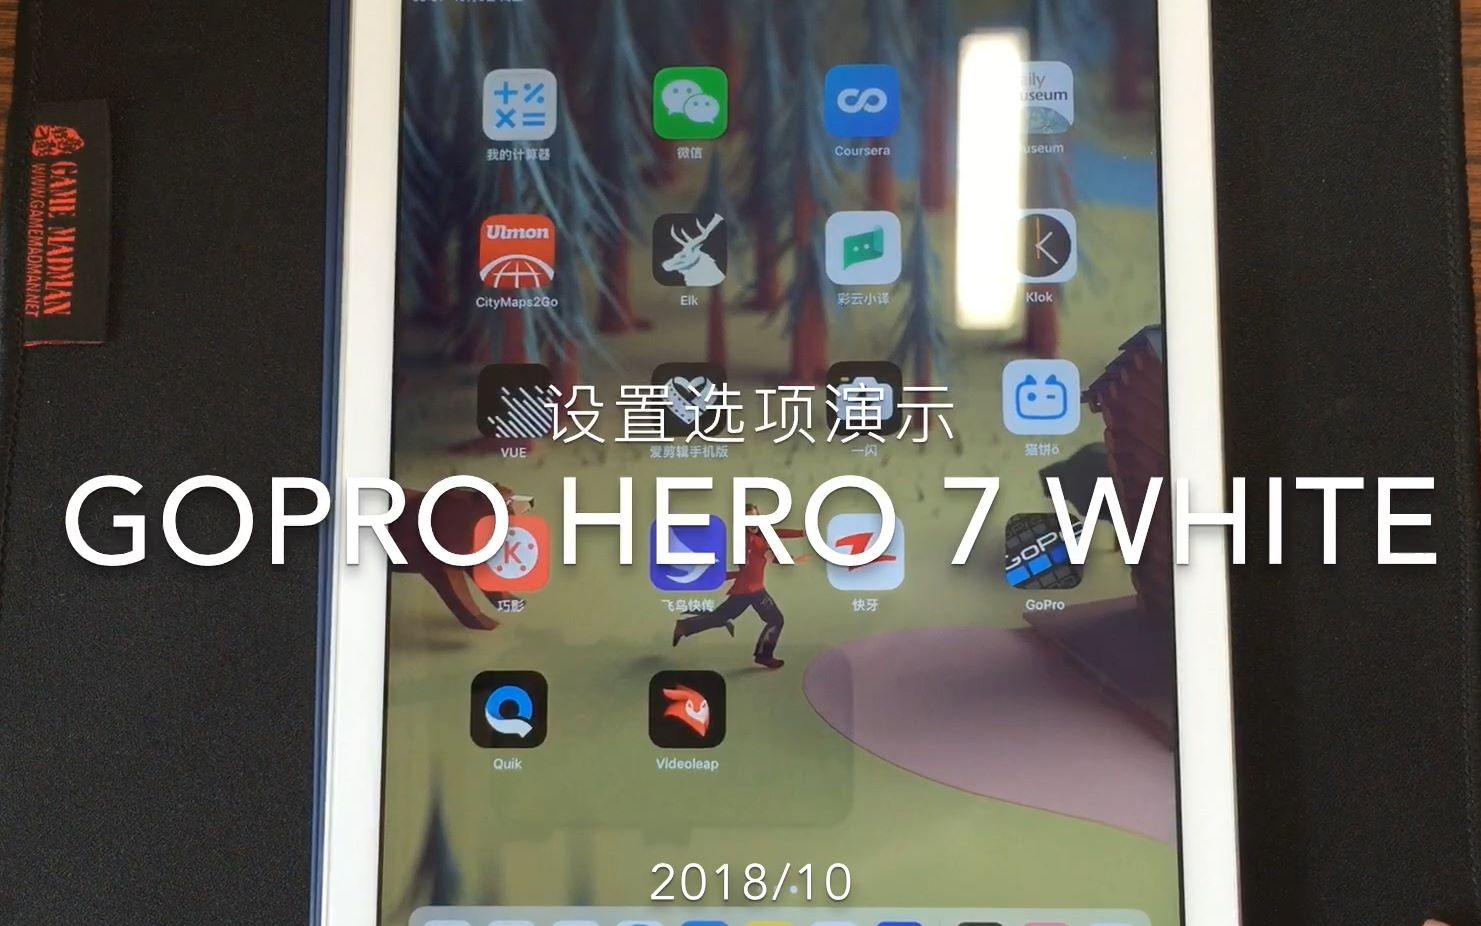 白狗gopro Hero 7 White 系统设置选项演示 App 008 哔哩哔哩 つロ干杯 Bilibili